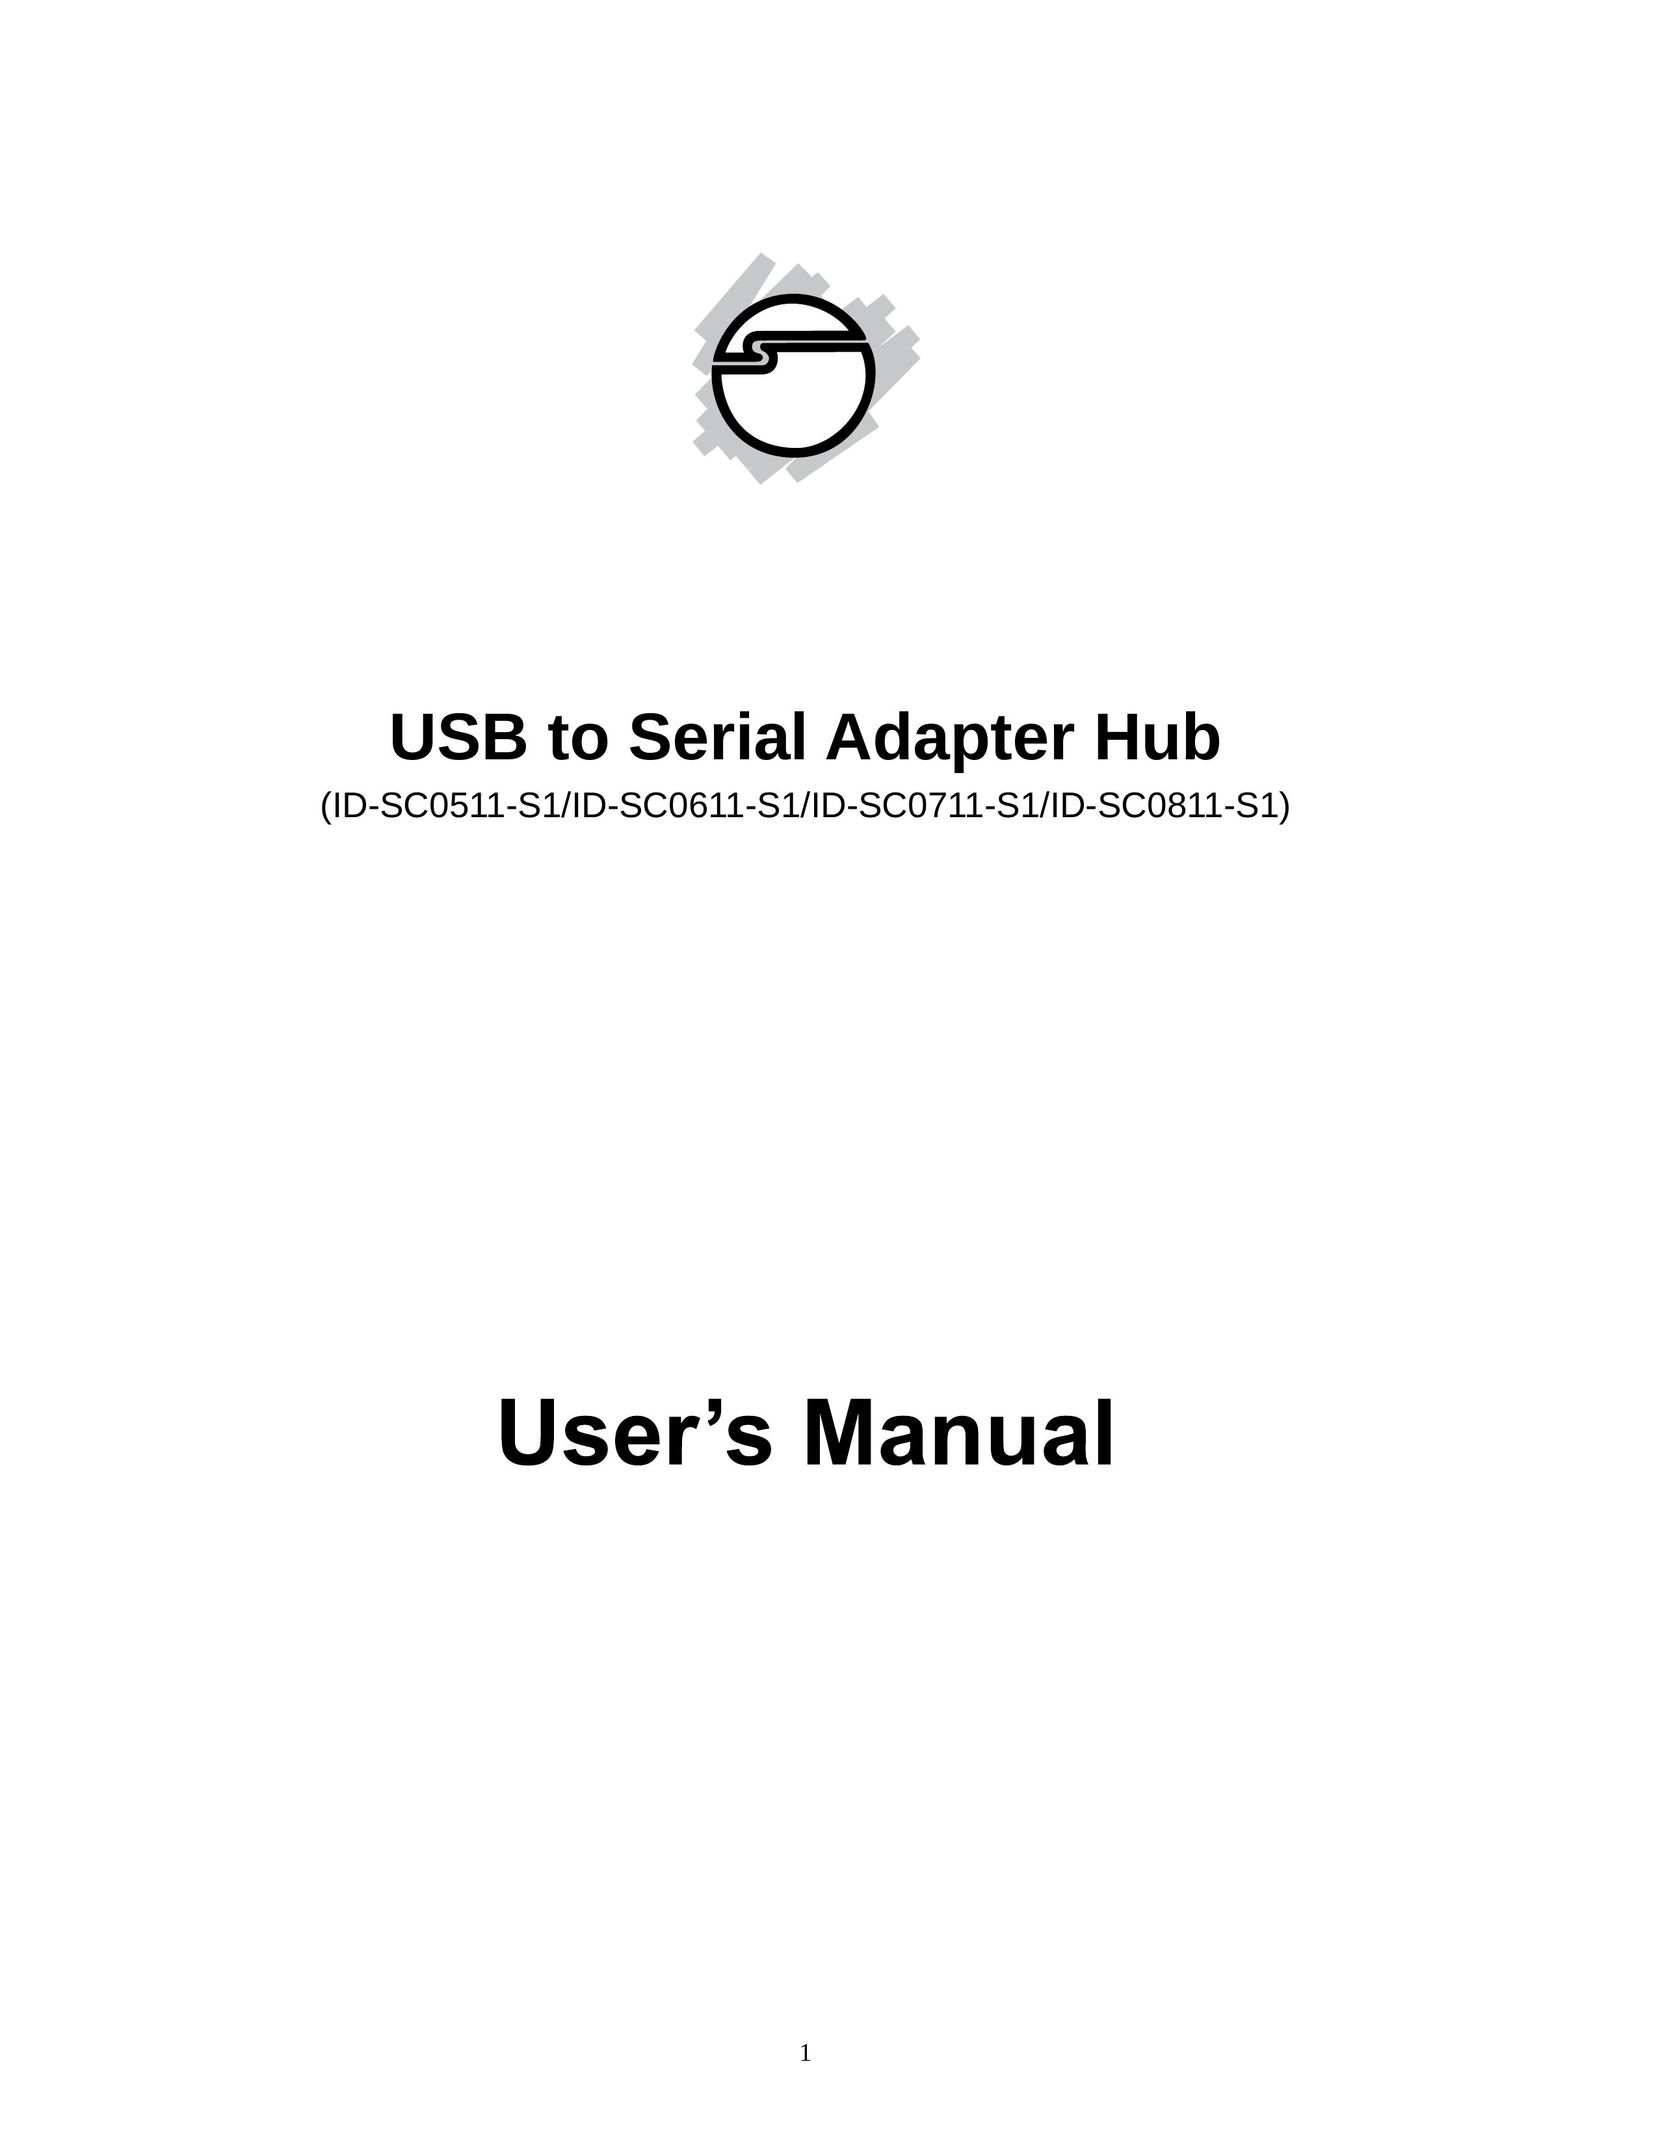 SIIG ID-SC0711-S1 Computer Drive User Manual